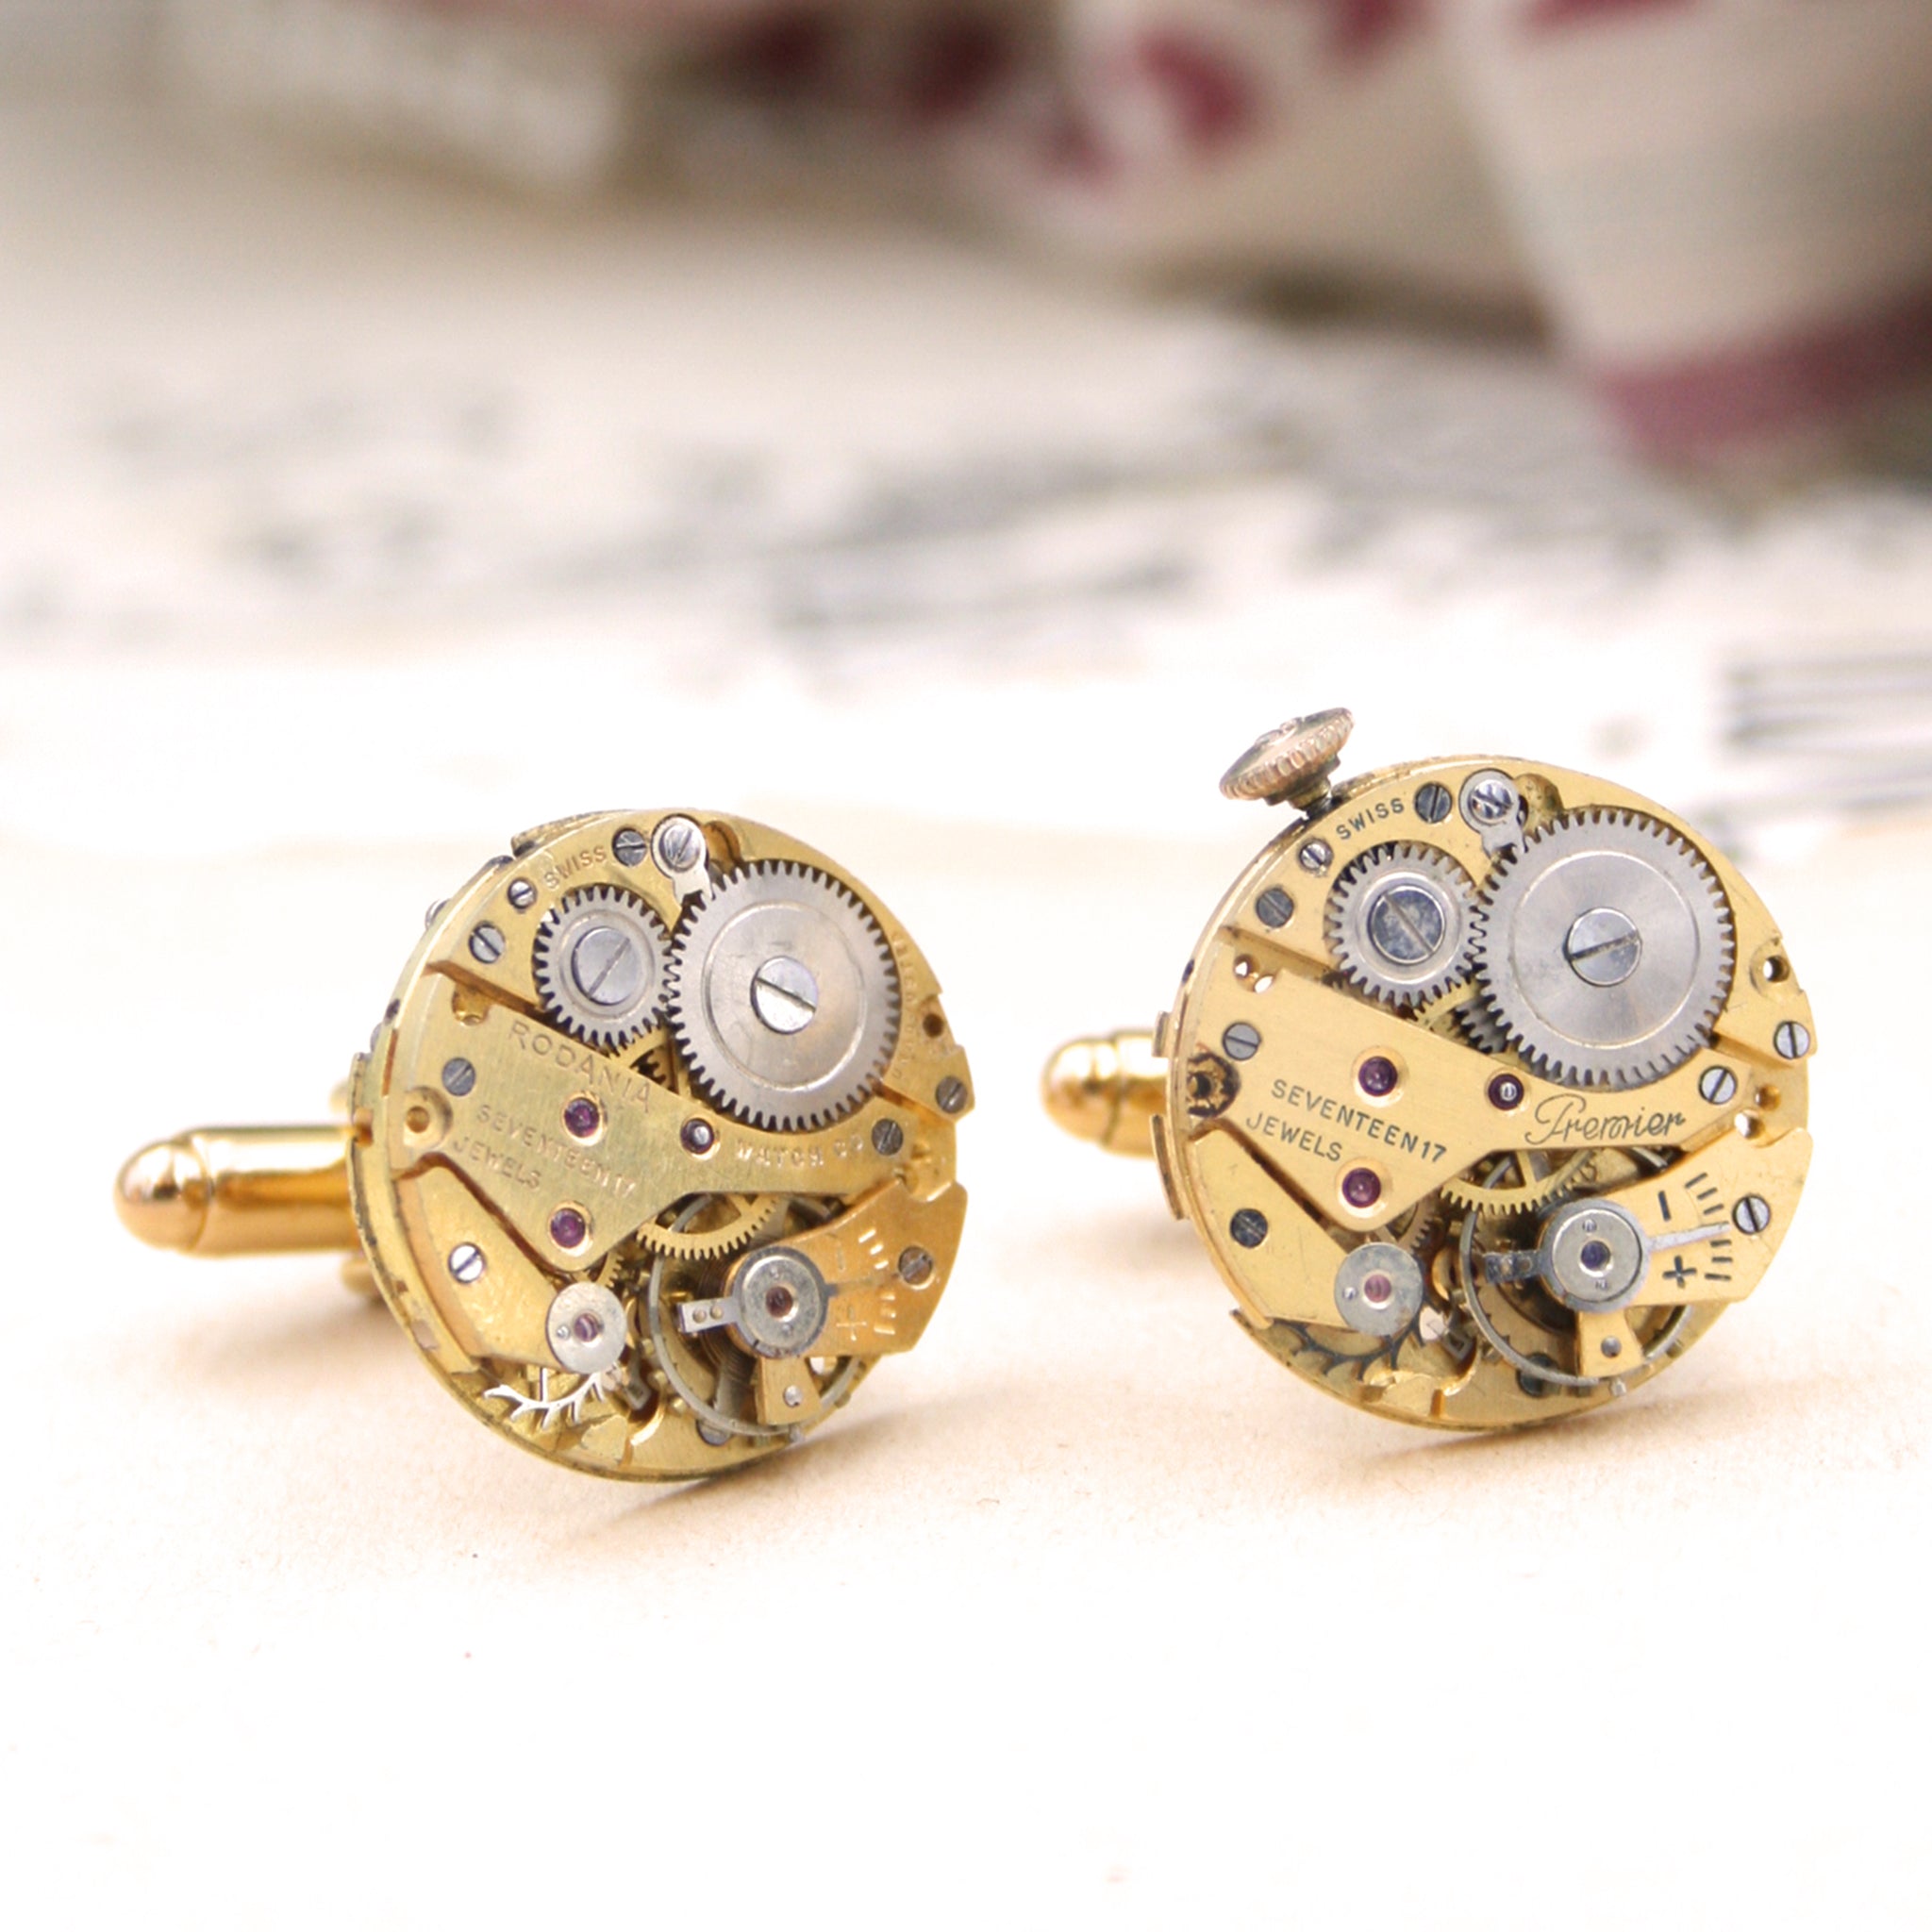 gold steampunk cufflinks featuring antique watch movements